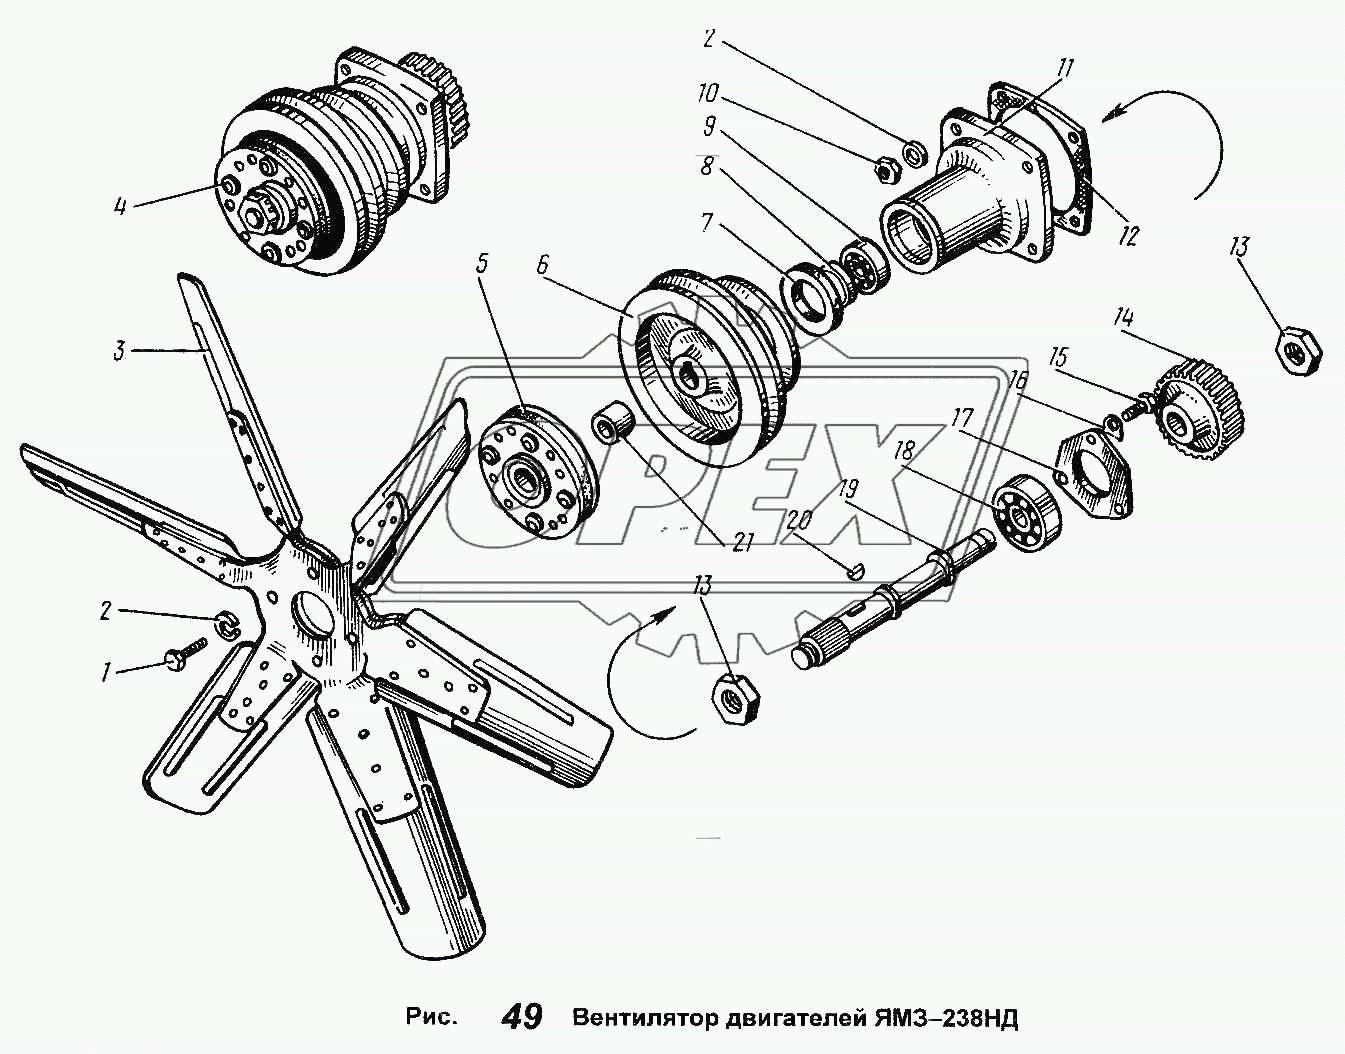 Вентилятор двигателя ЯМЗ-238НД